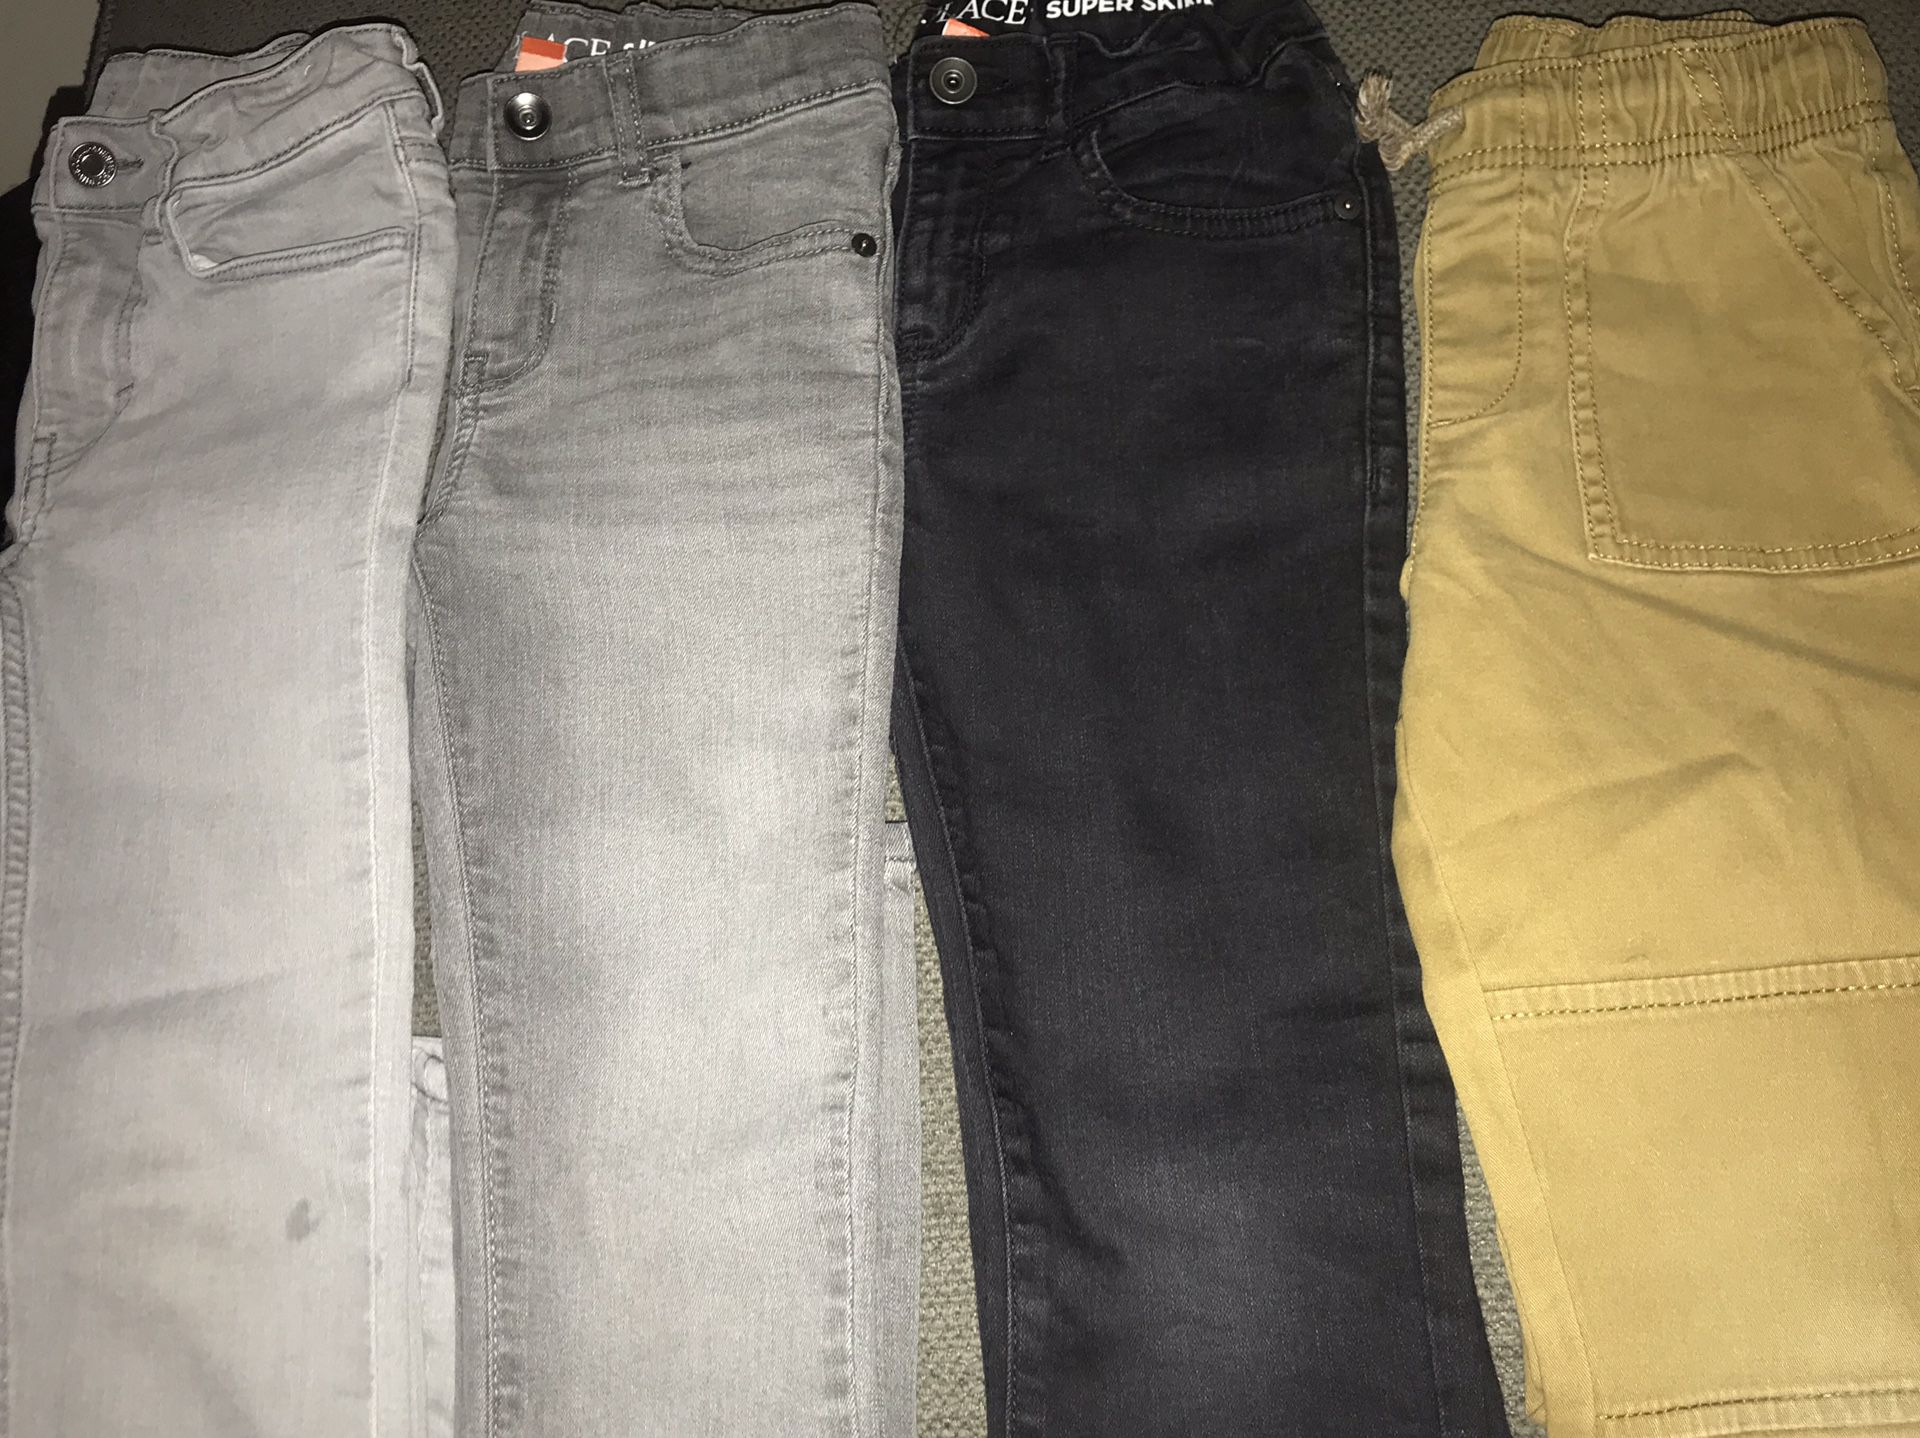 Boys size 7 jeans